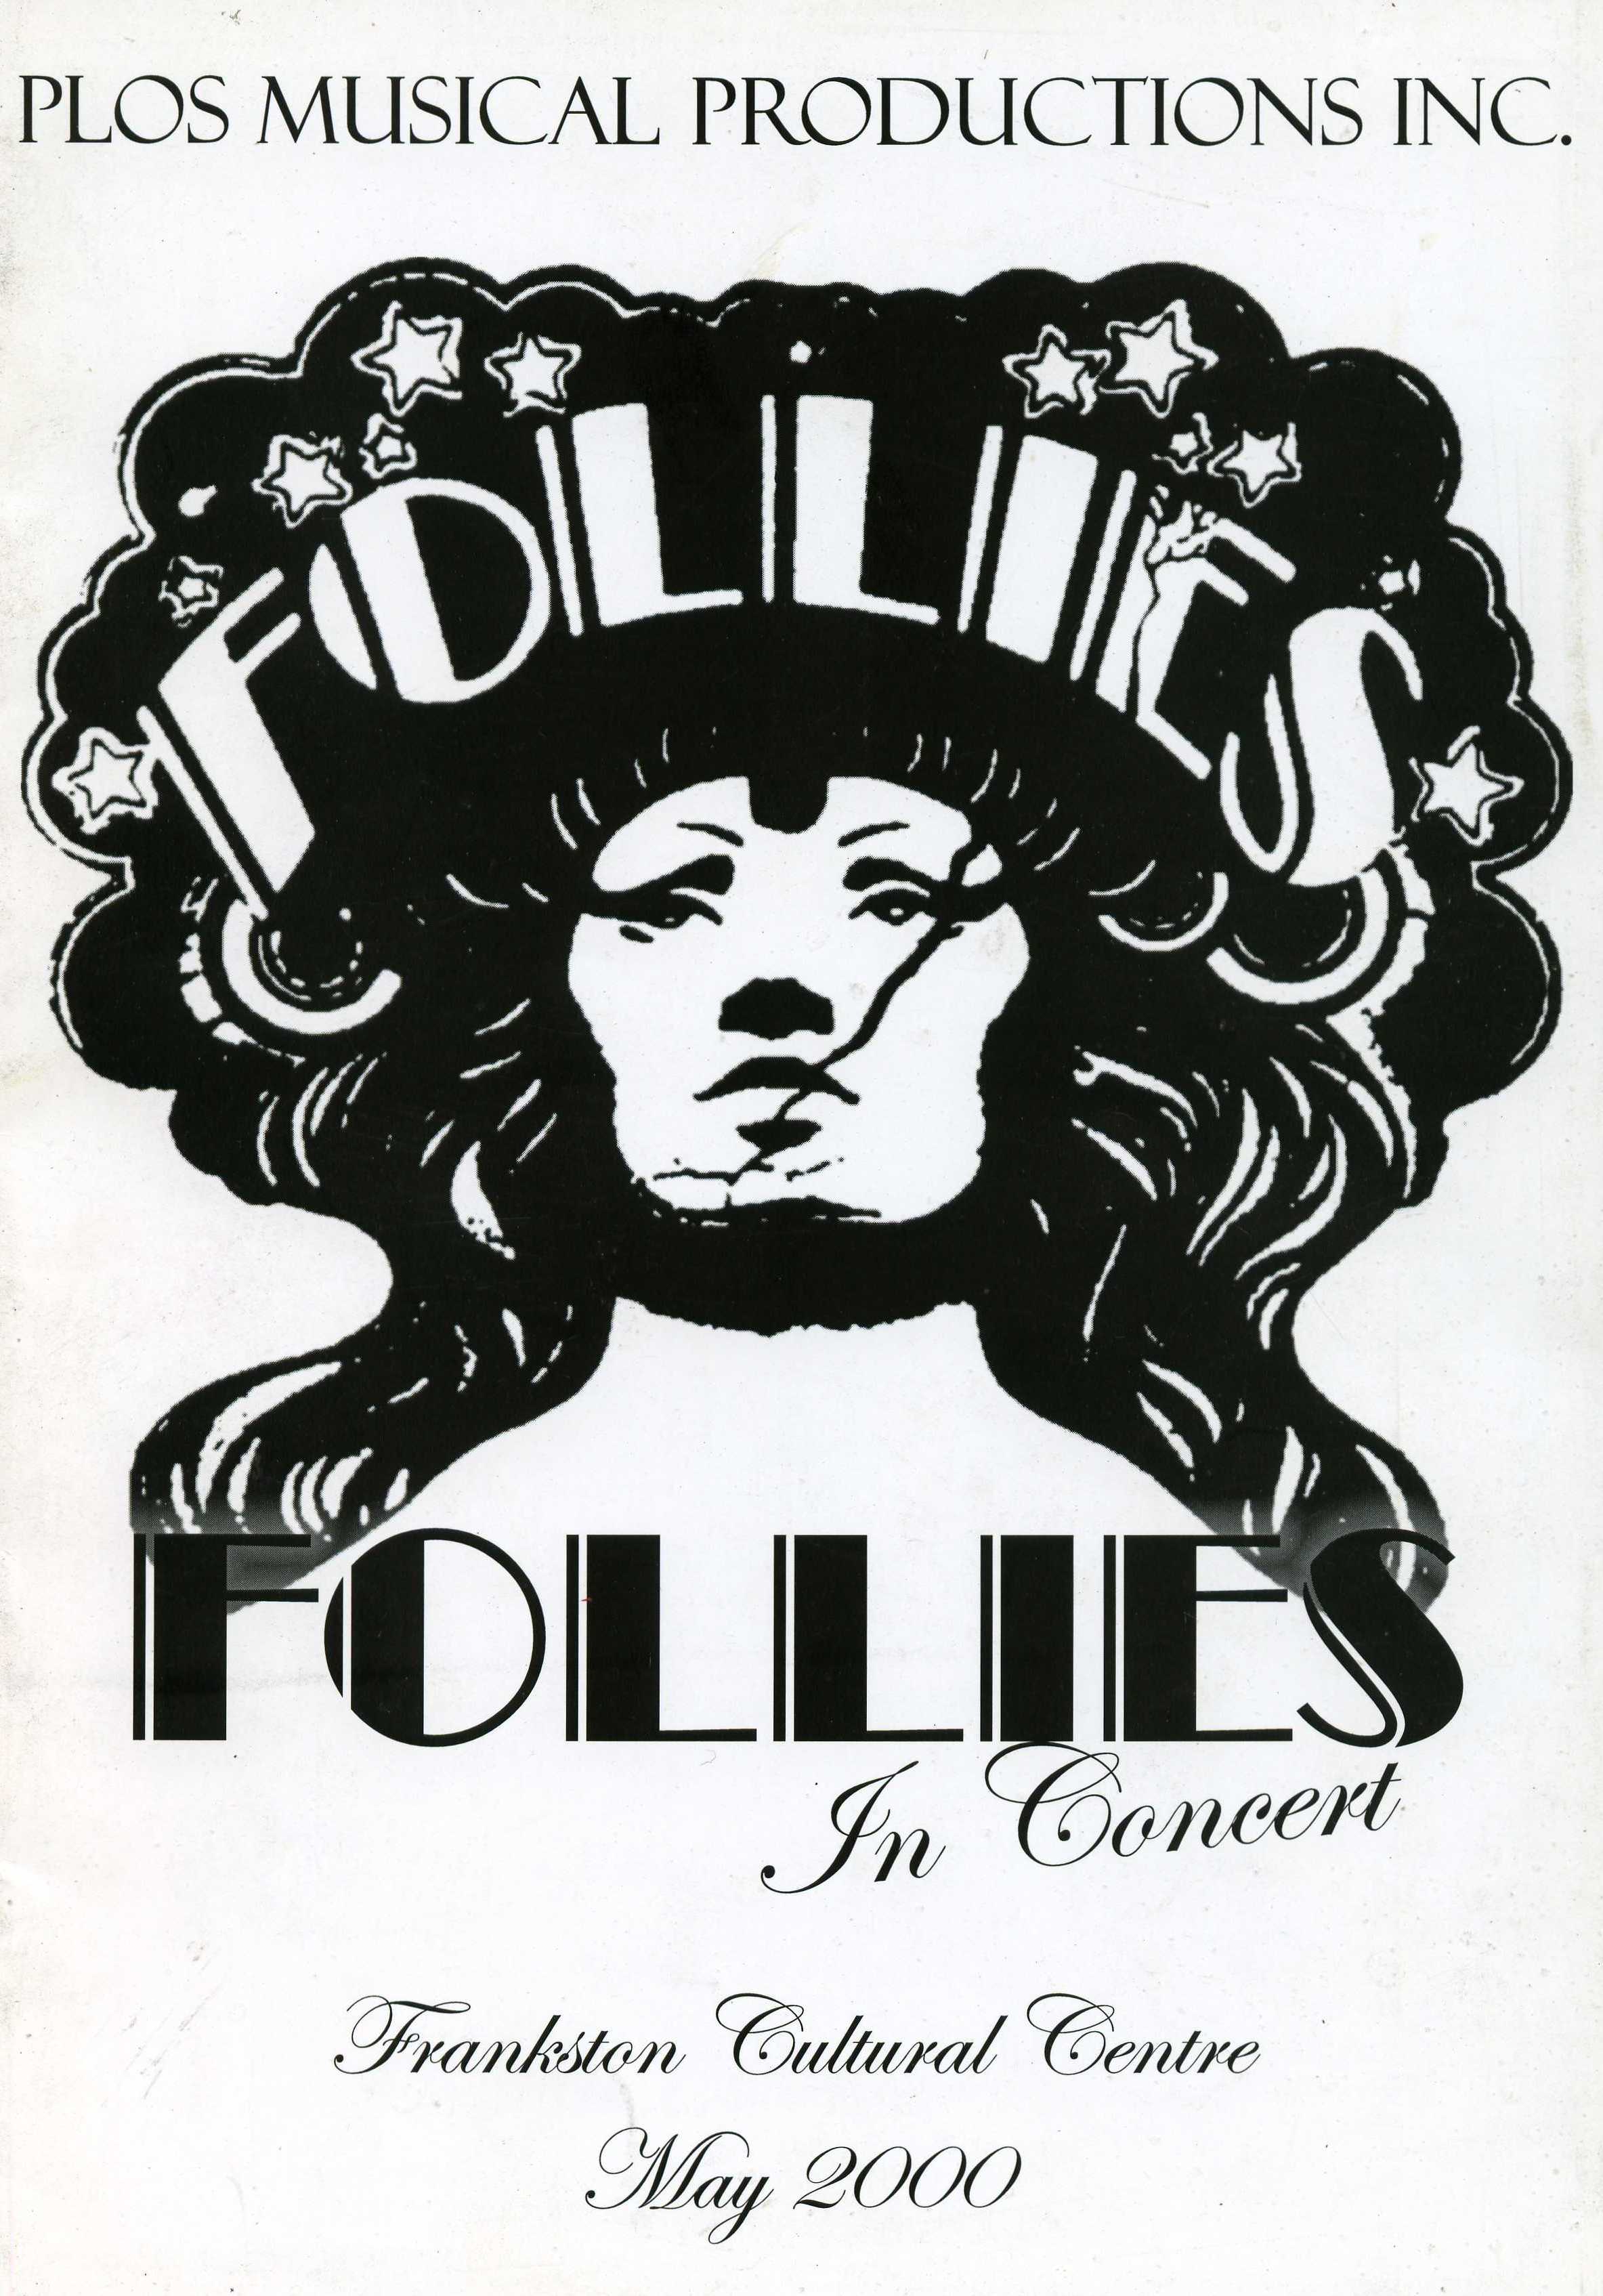 Follies in Concert